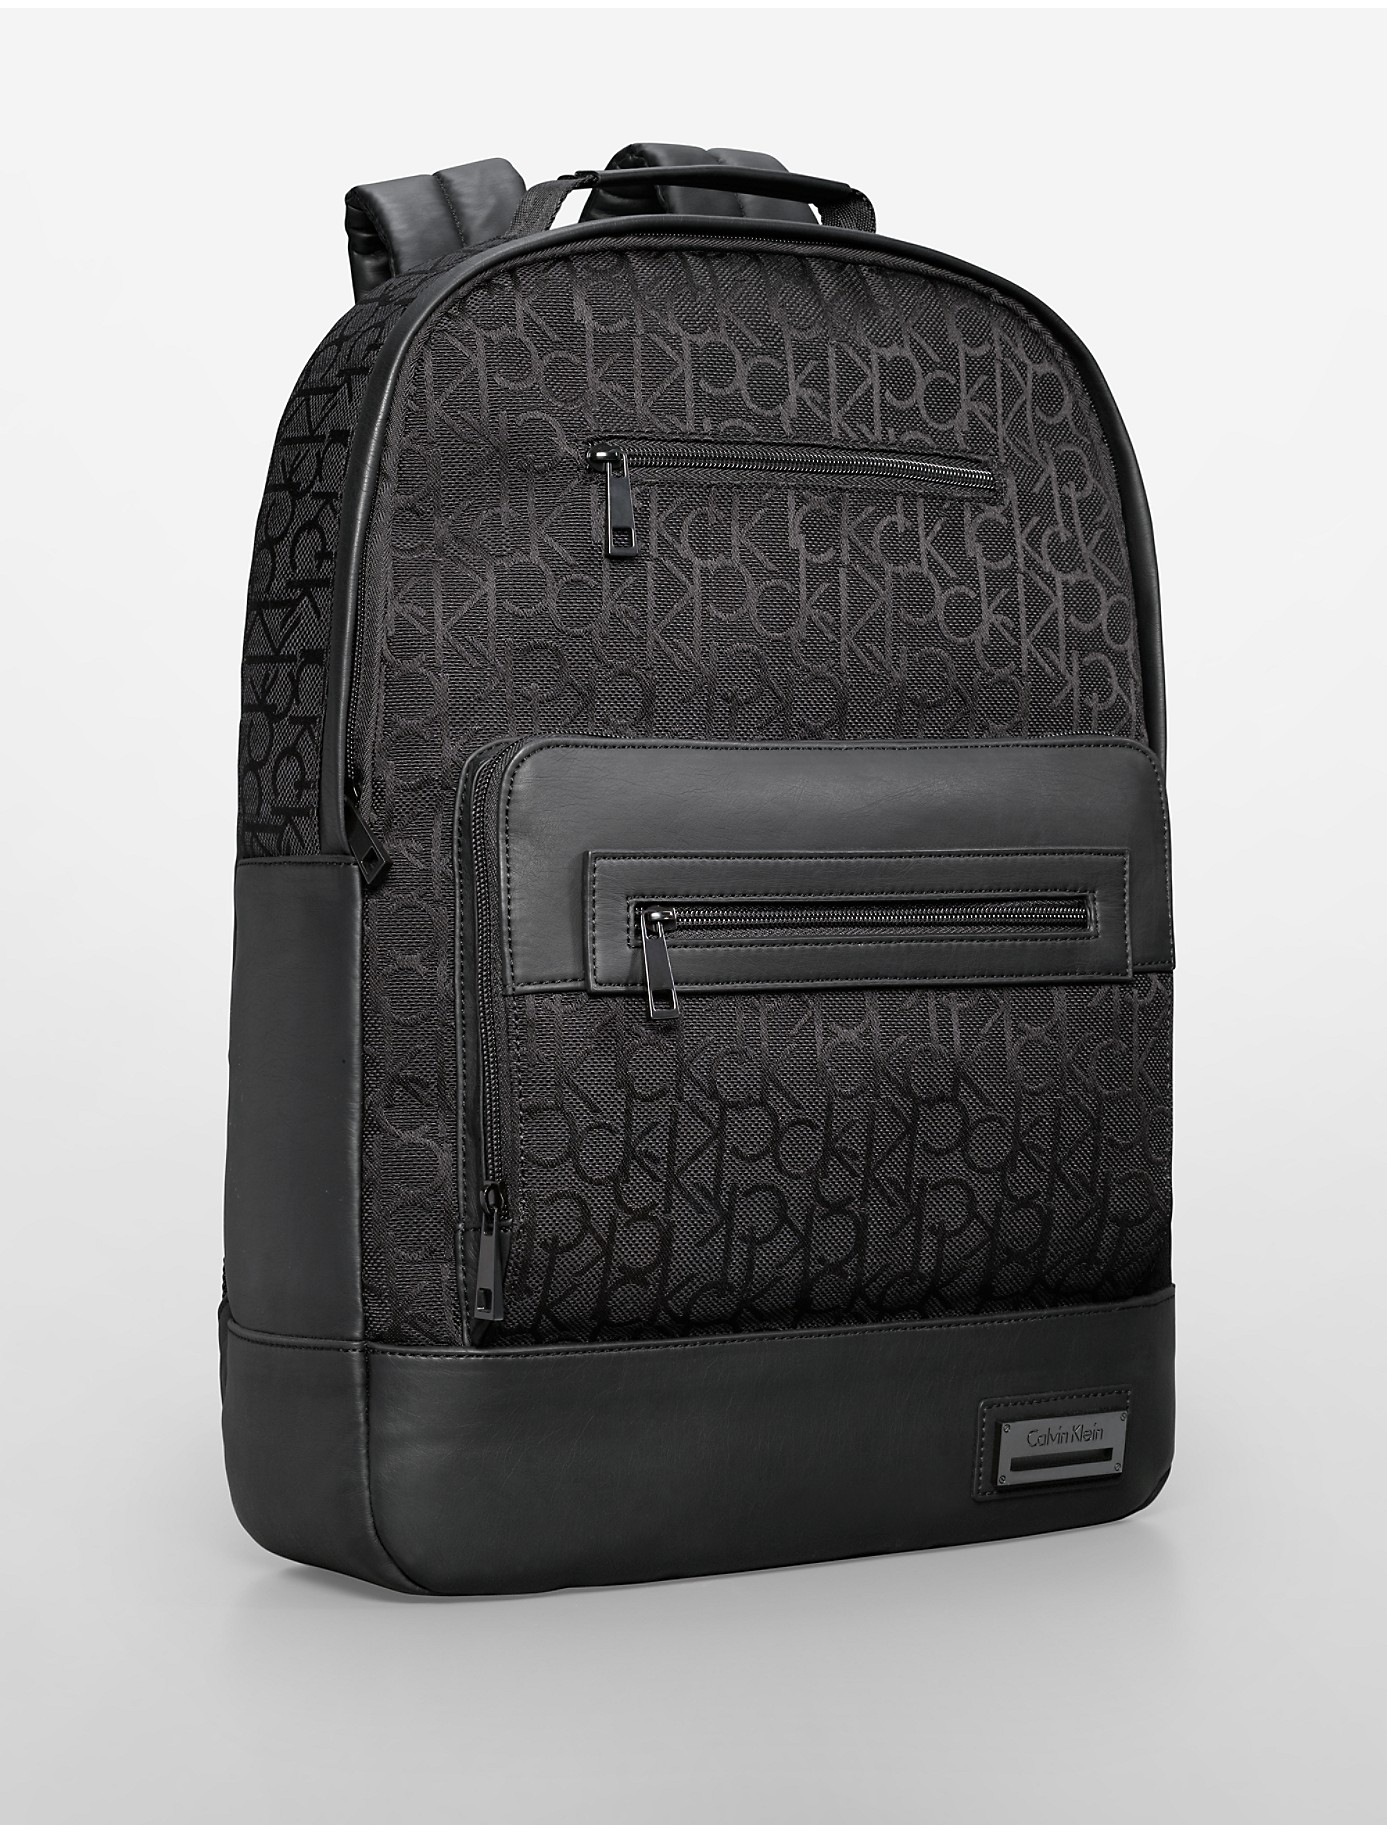 Lyst - Calvin Klein White Label Caleb Slim Backpack in Black for Men